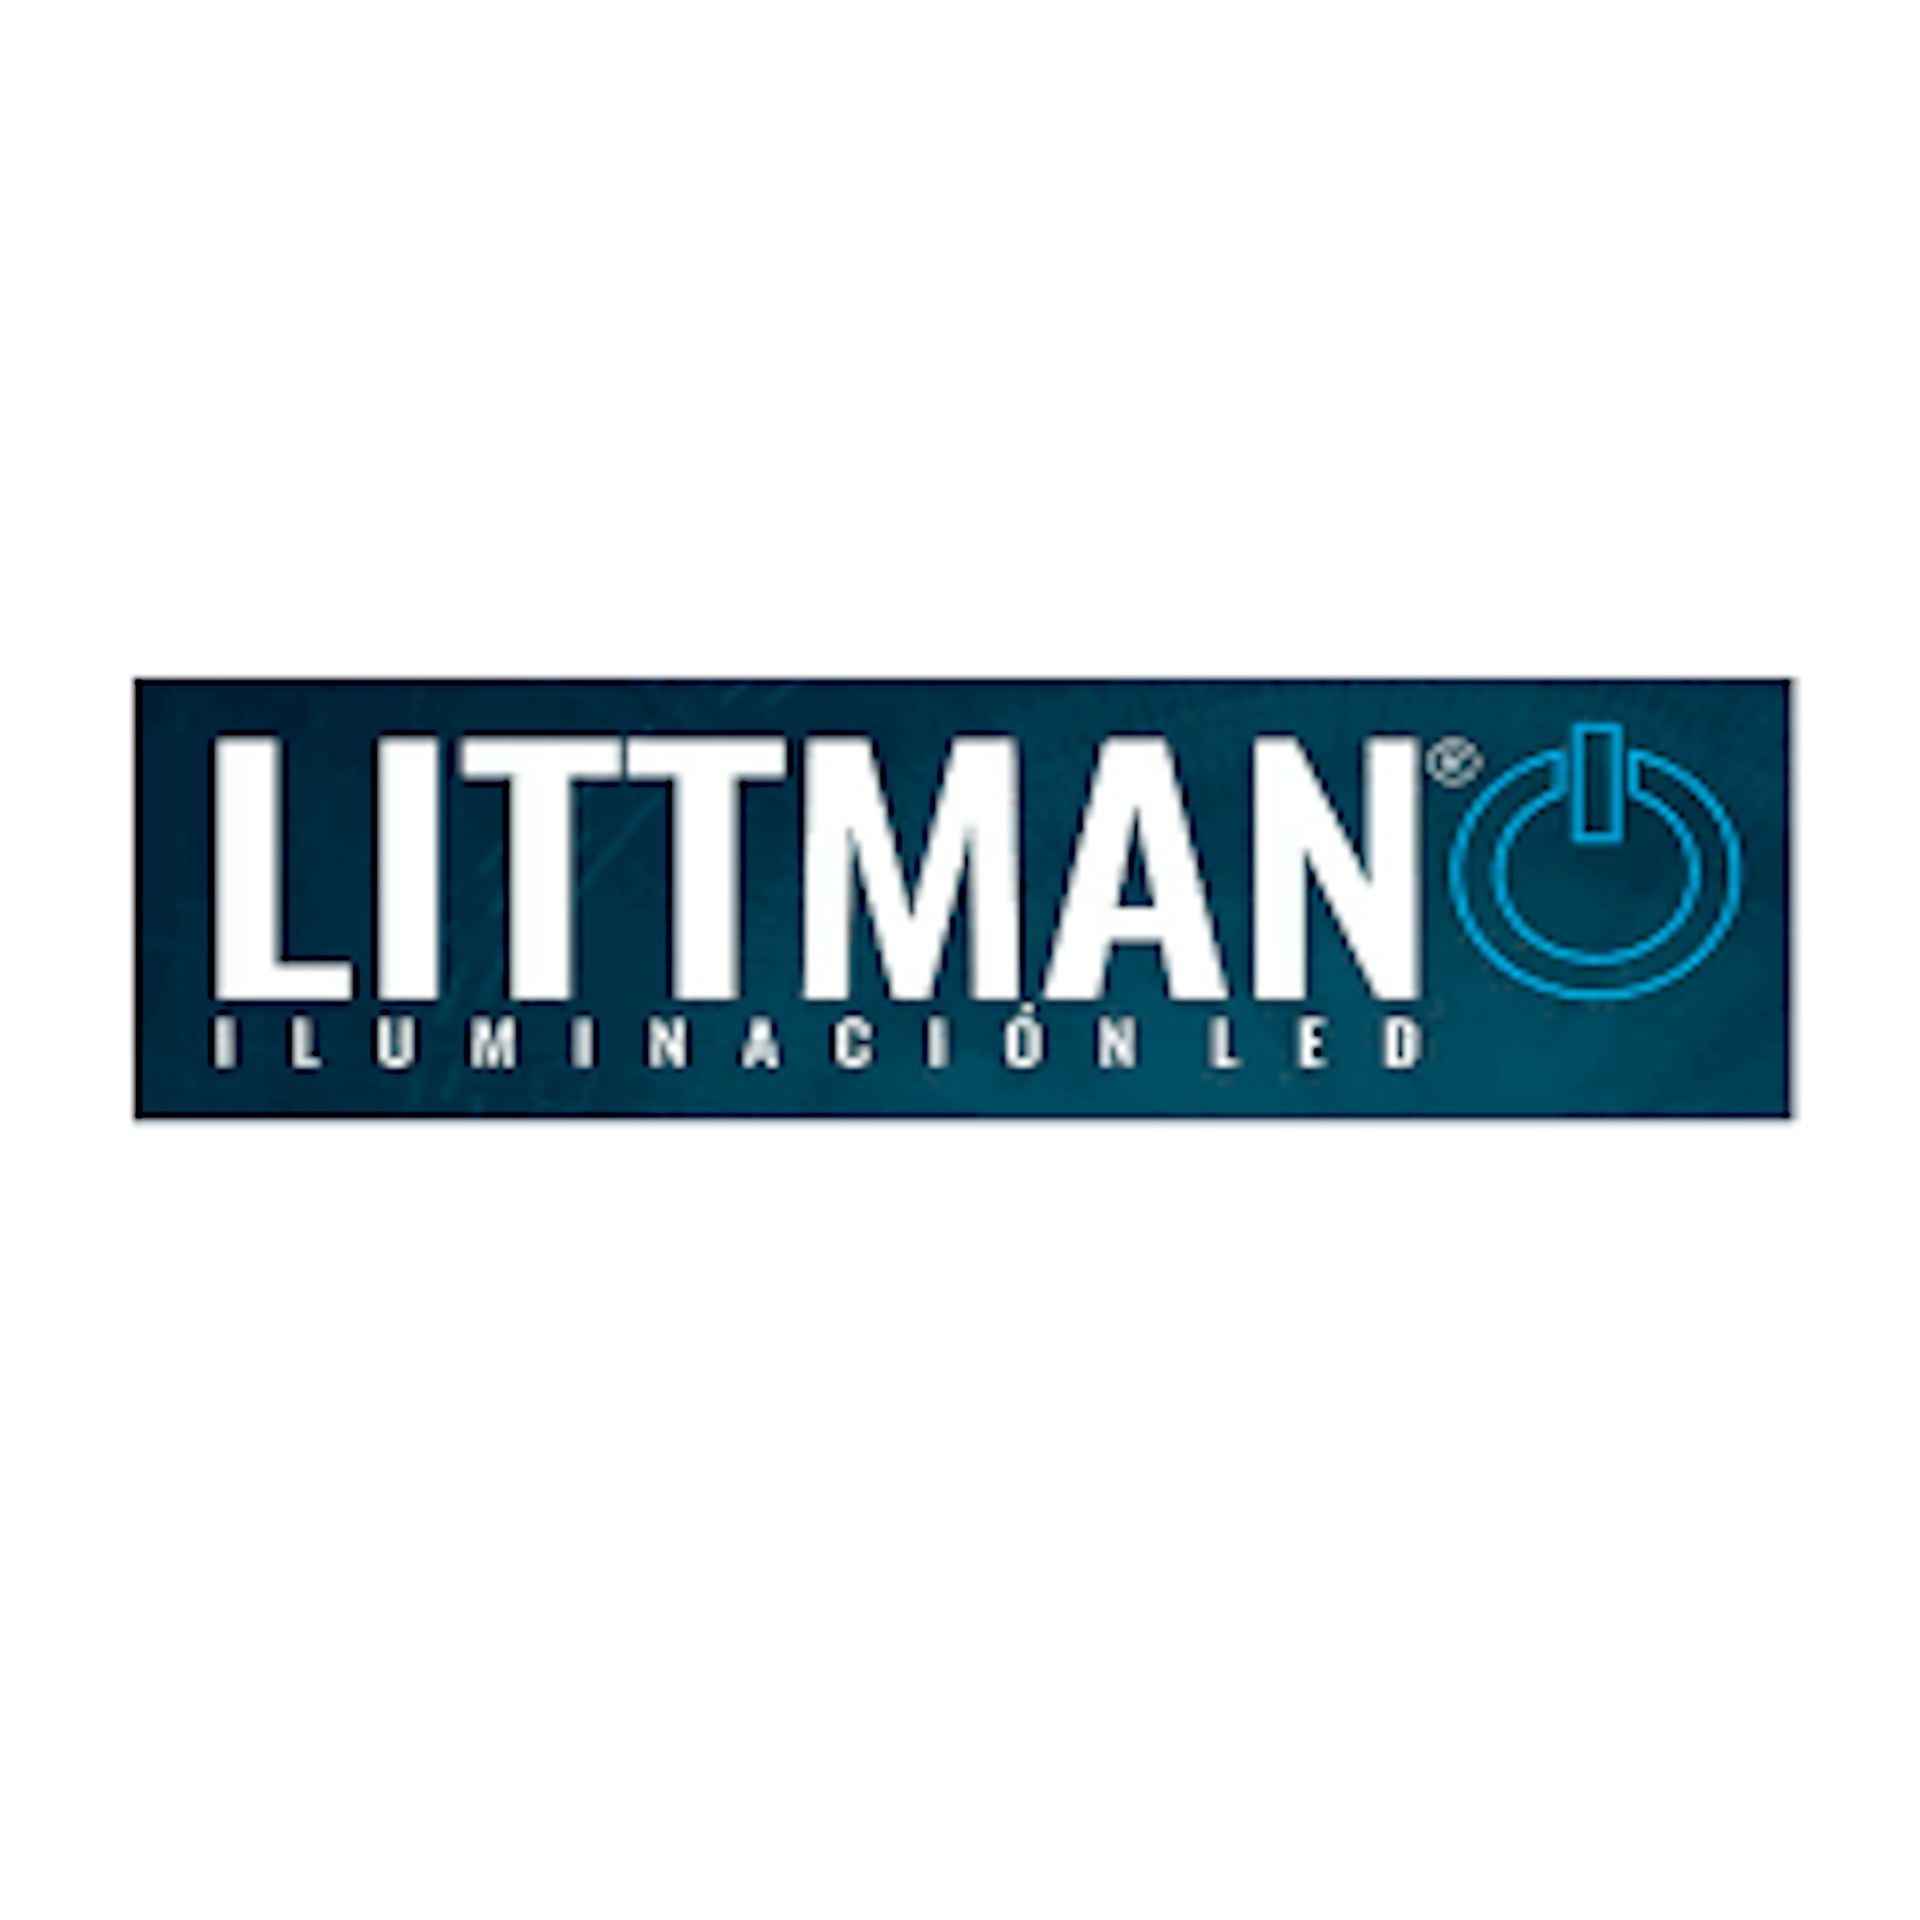 Littman